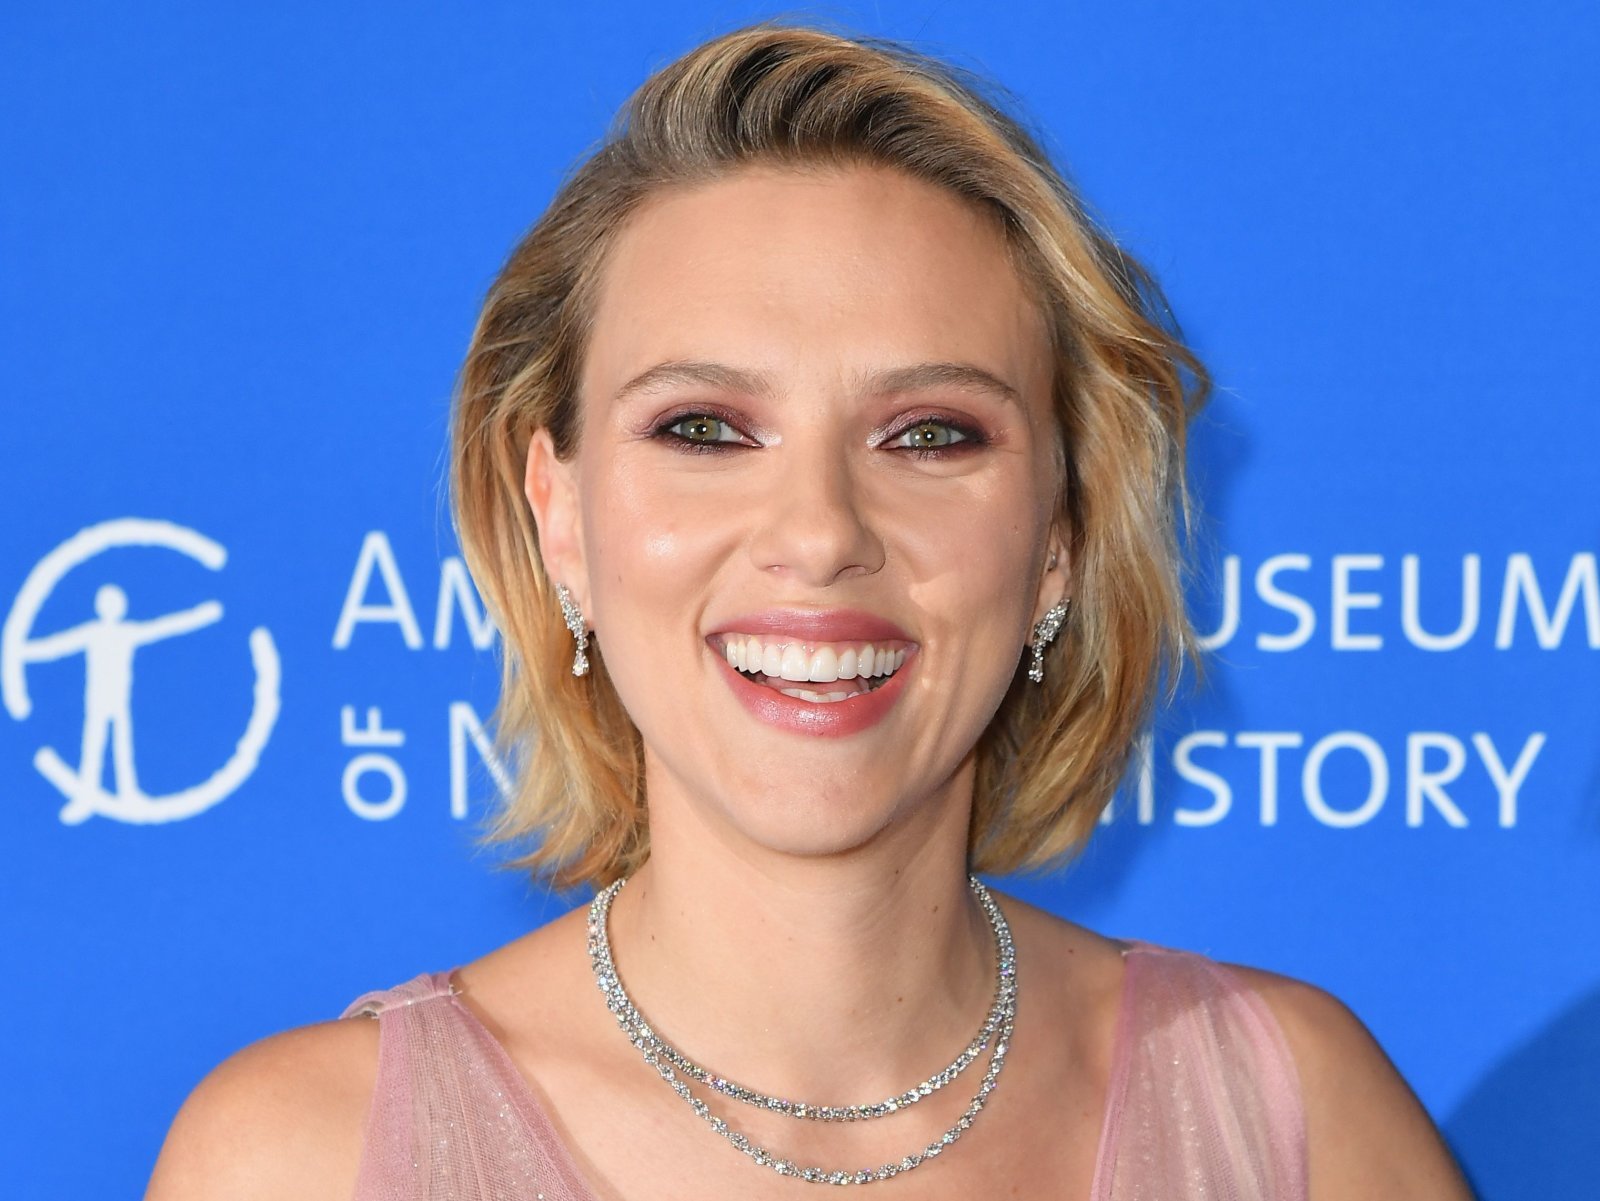 Scarlett Johansson Facial Porn - Scarlett Johansson says fighting deepfake porn is 'fruitless' | HITBSecNews